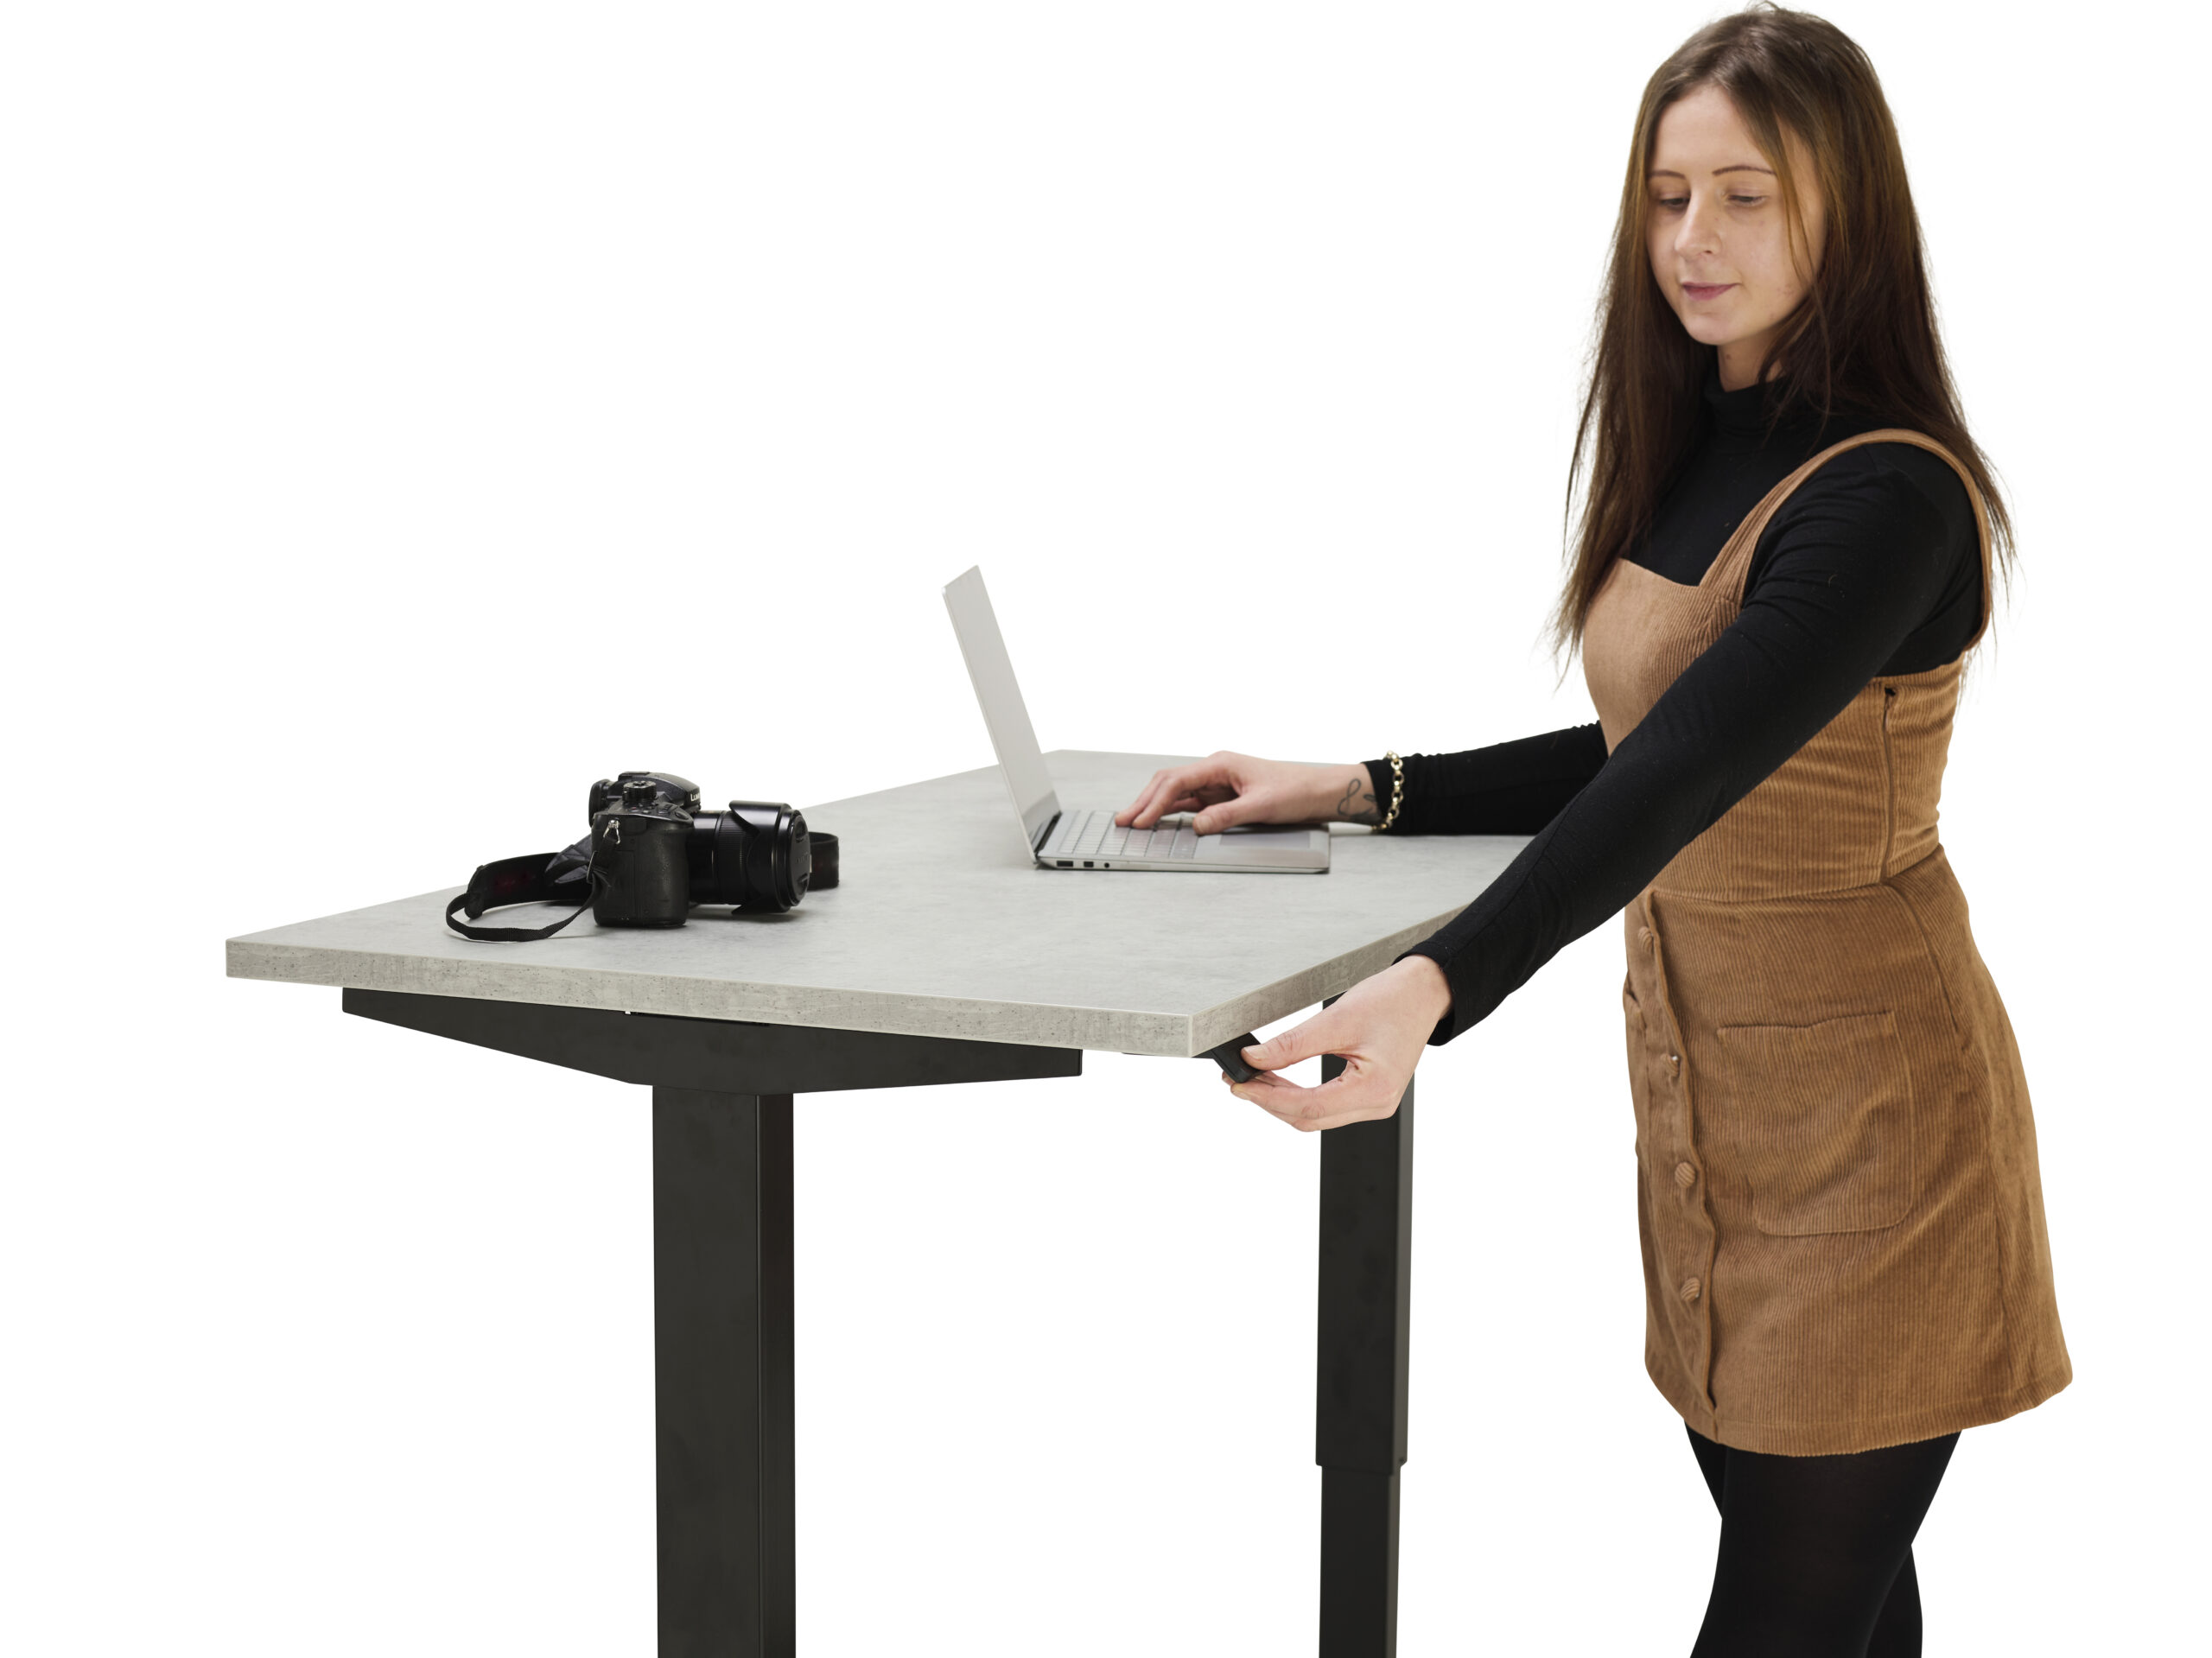 Choosing a height adjustable desk